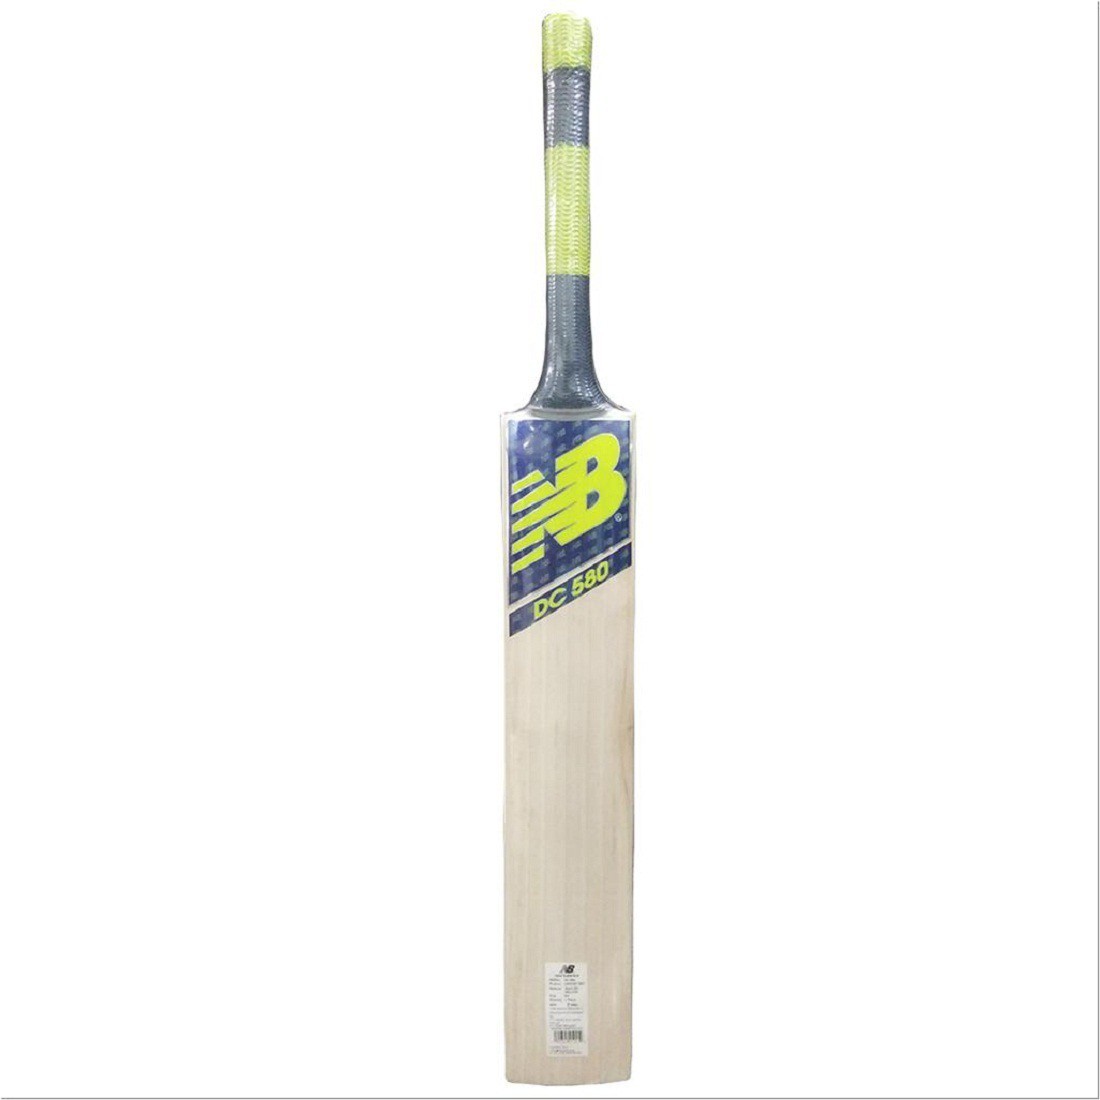 nb dc 580 cricket bat